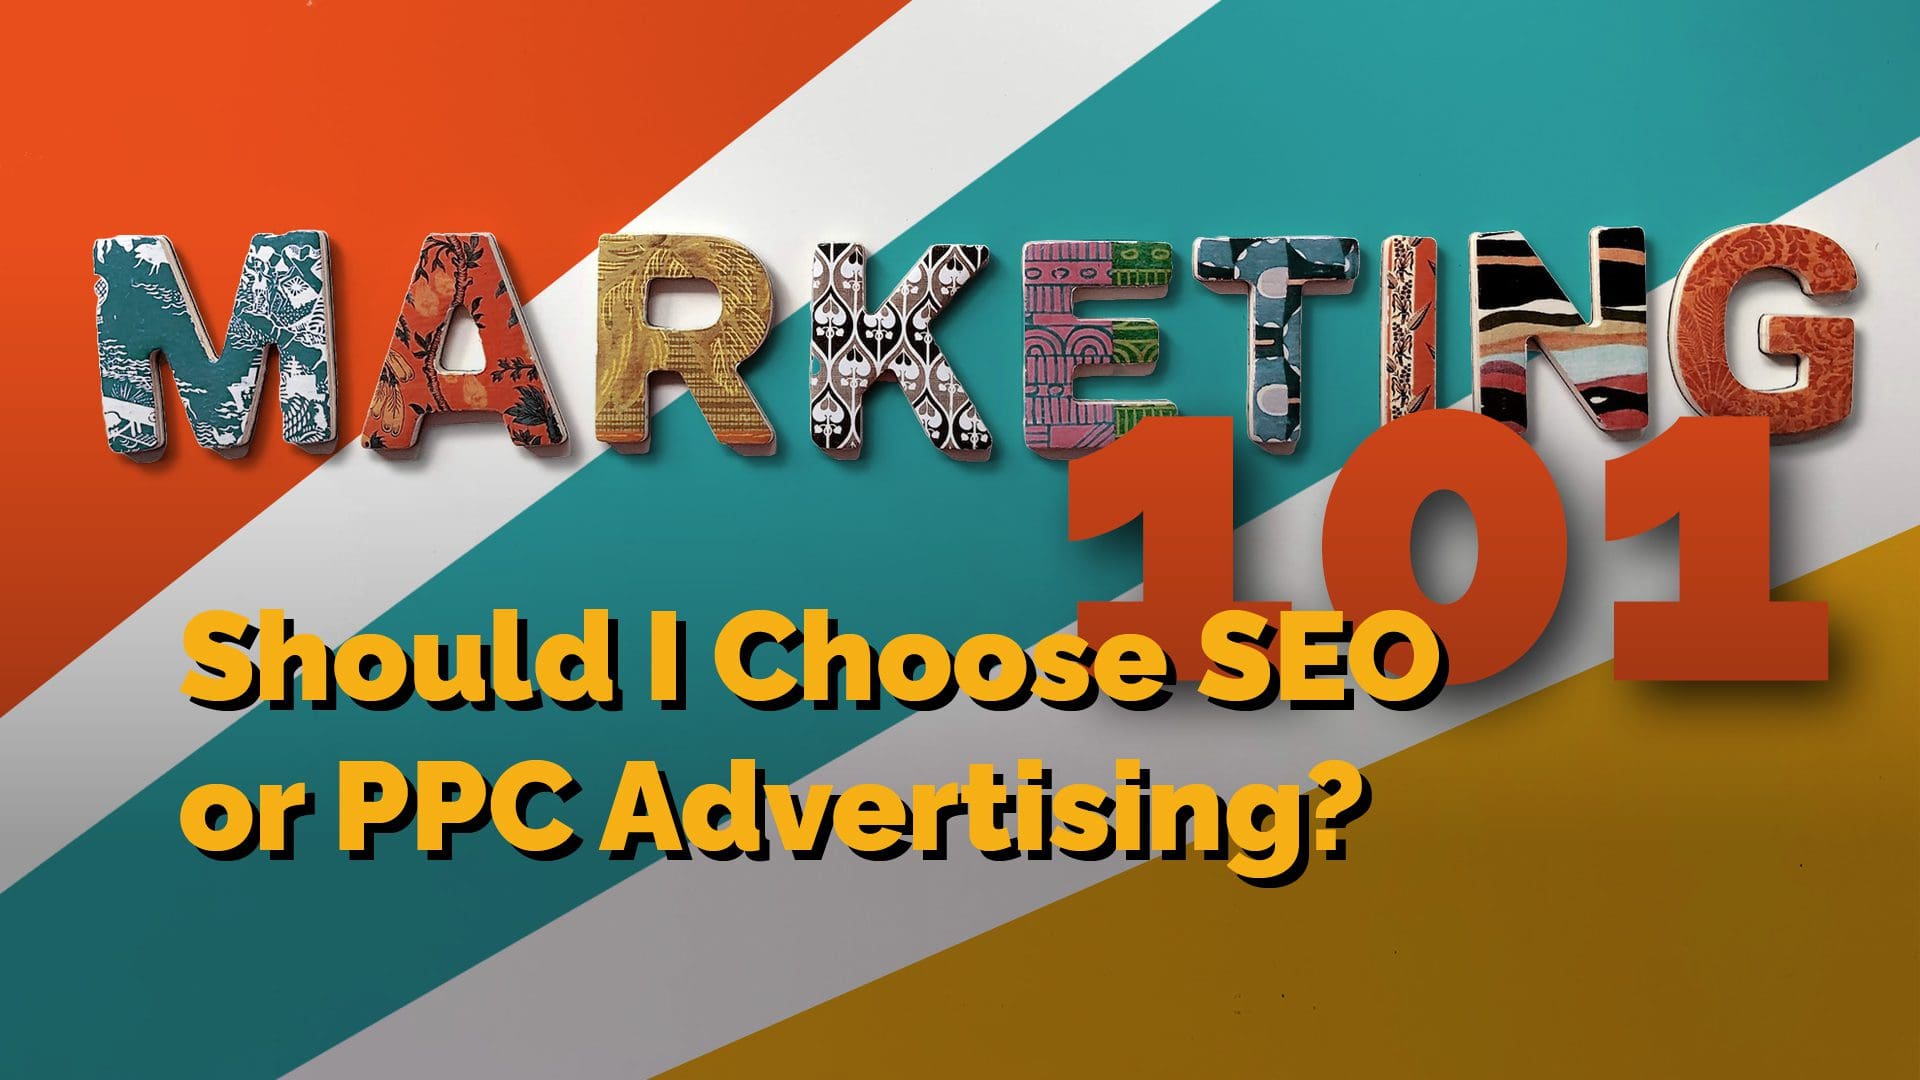 Marketing 101: Should I Choose SEO or PPC Advertising?